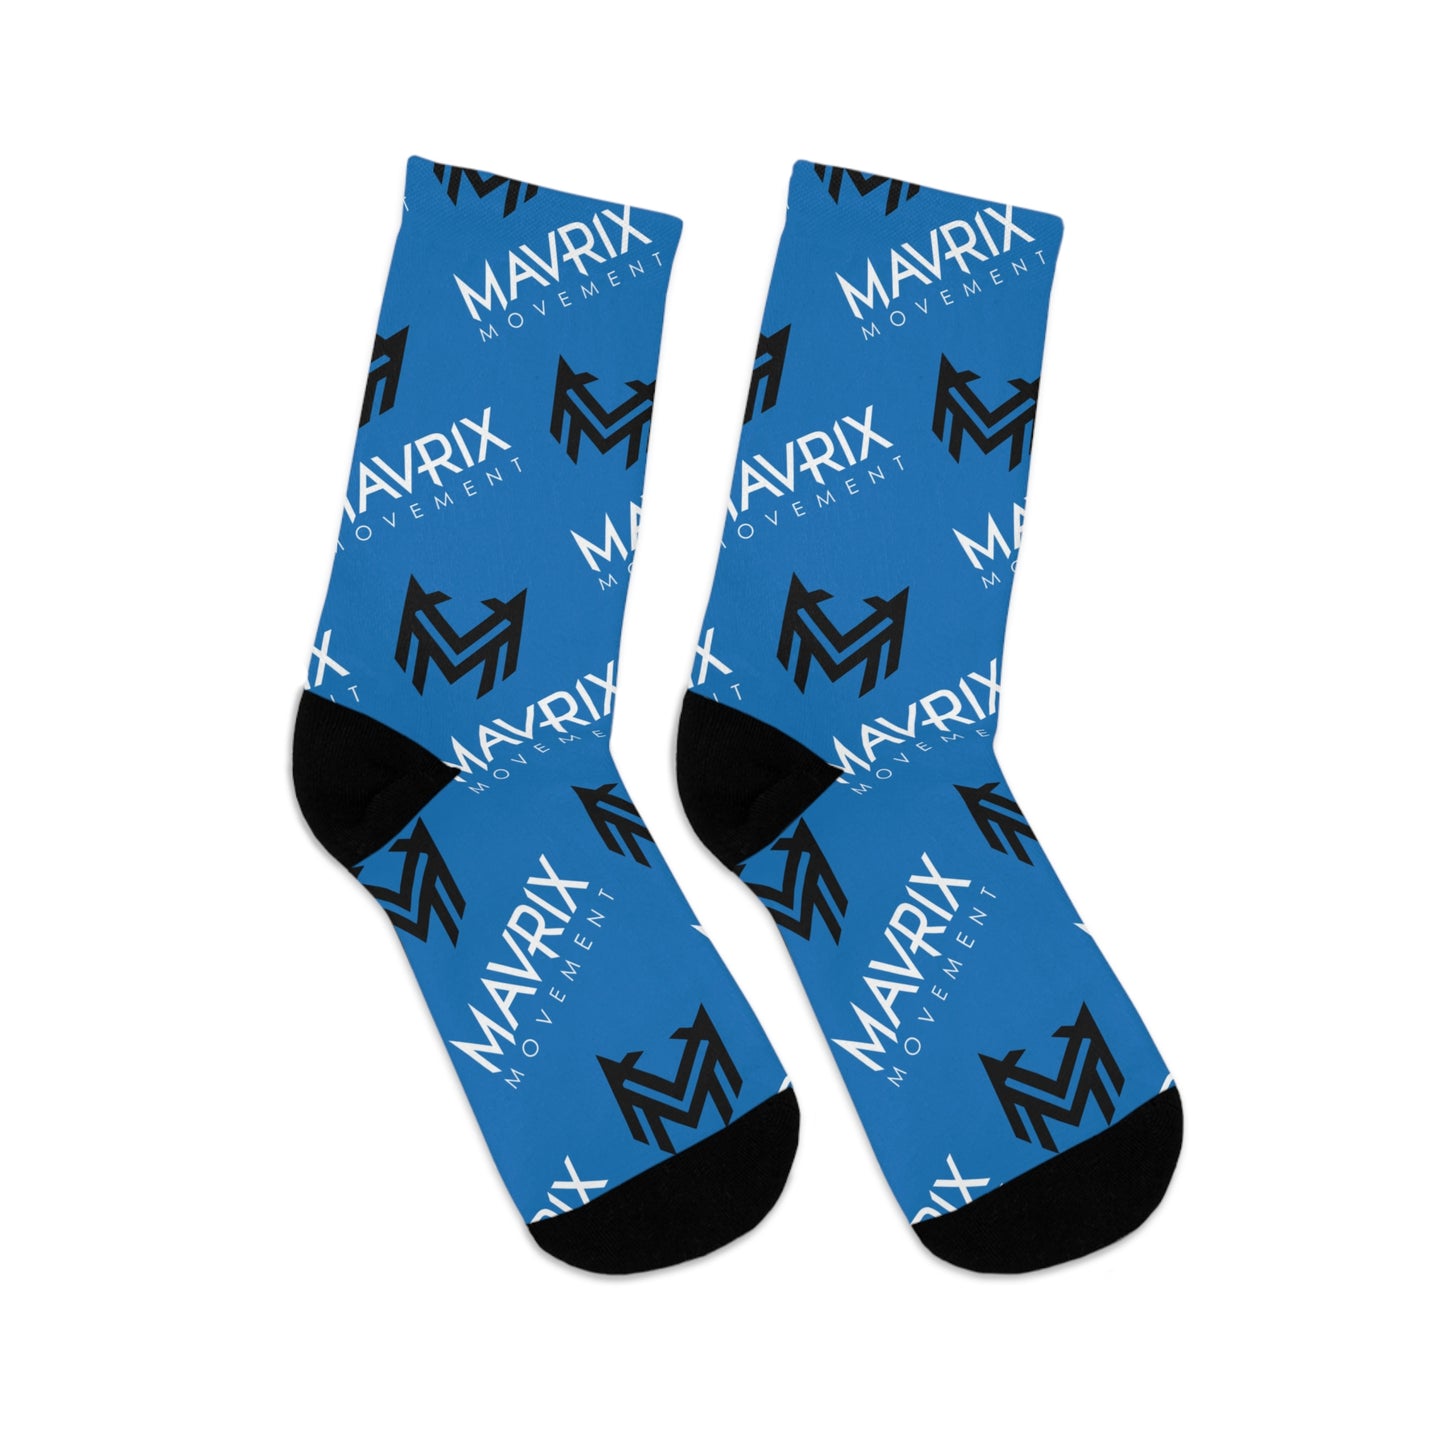 Mavrix Logos Blue Socks